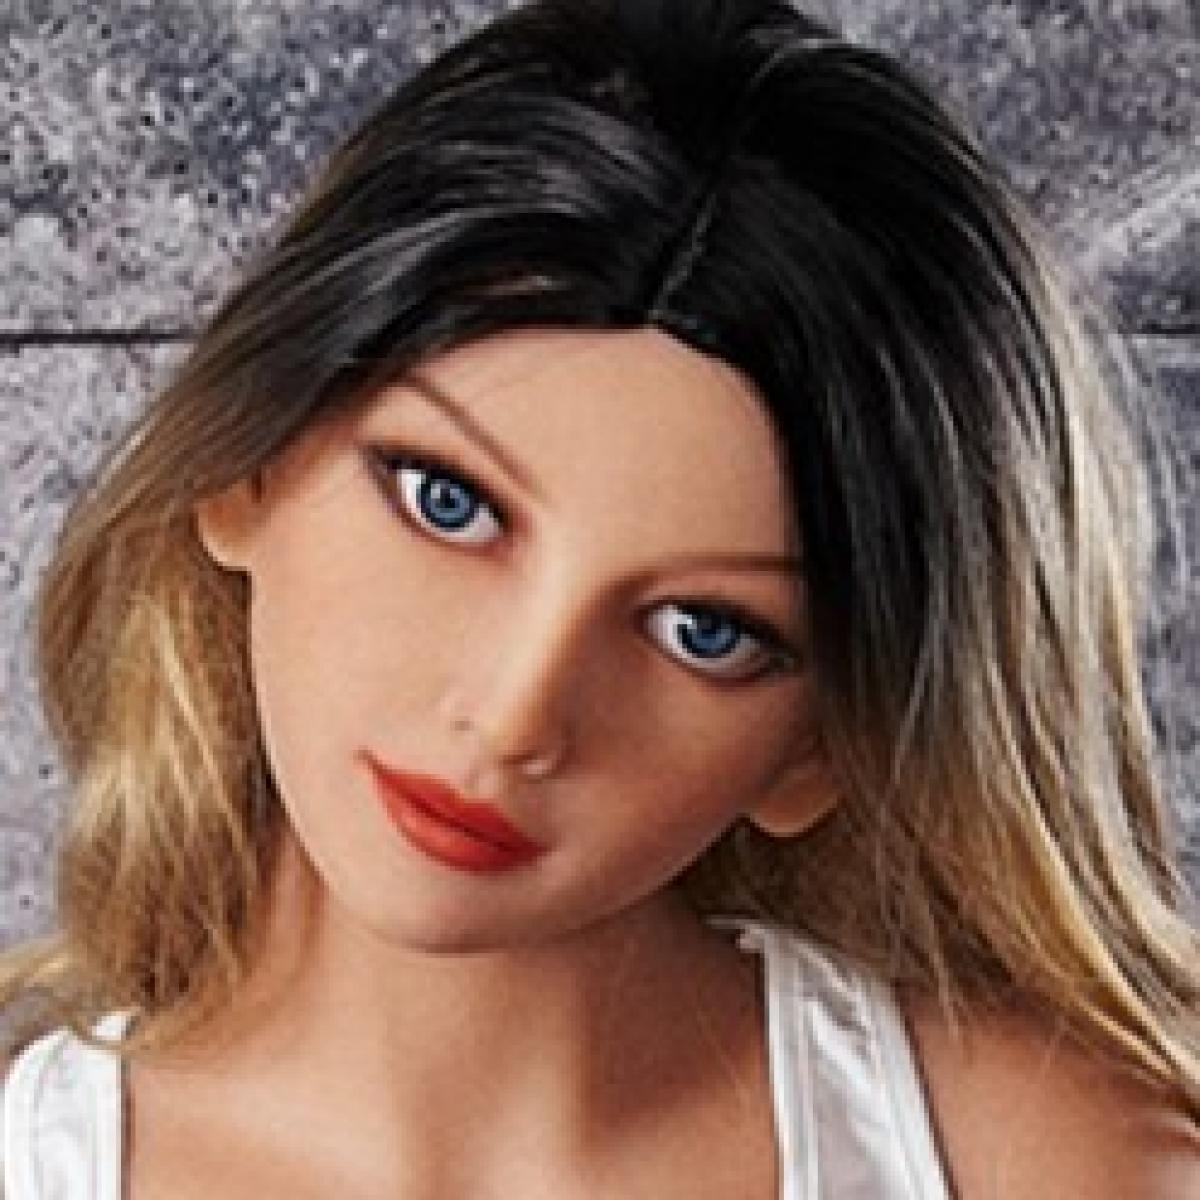 Neodoll Racy Ellen Head - Sex Doll Head - M16 Compatible – Tan